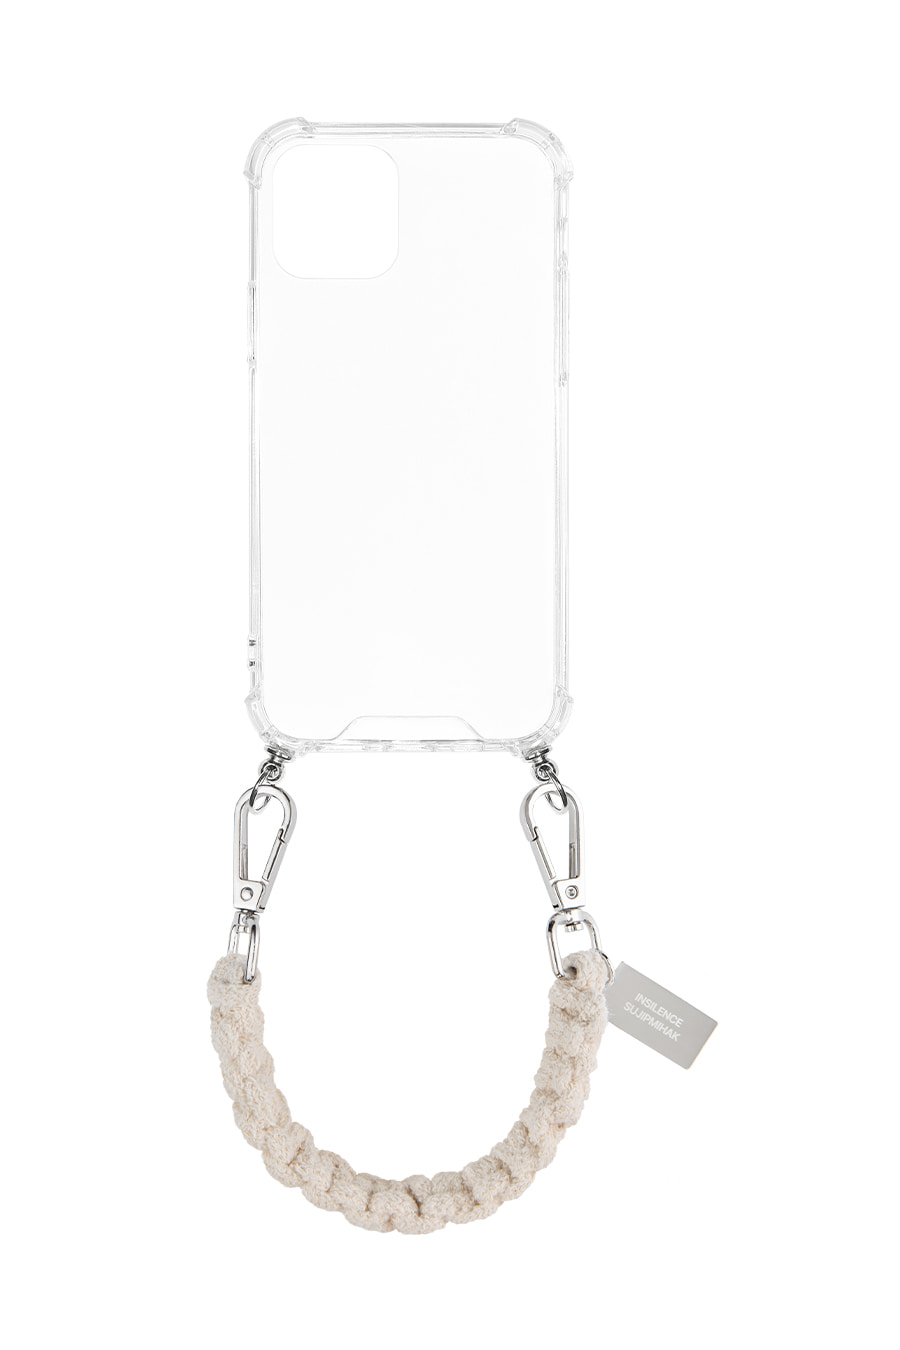 [Sujipmihak] Anatomy iPhone Strap Case